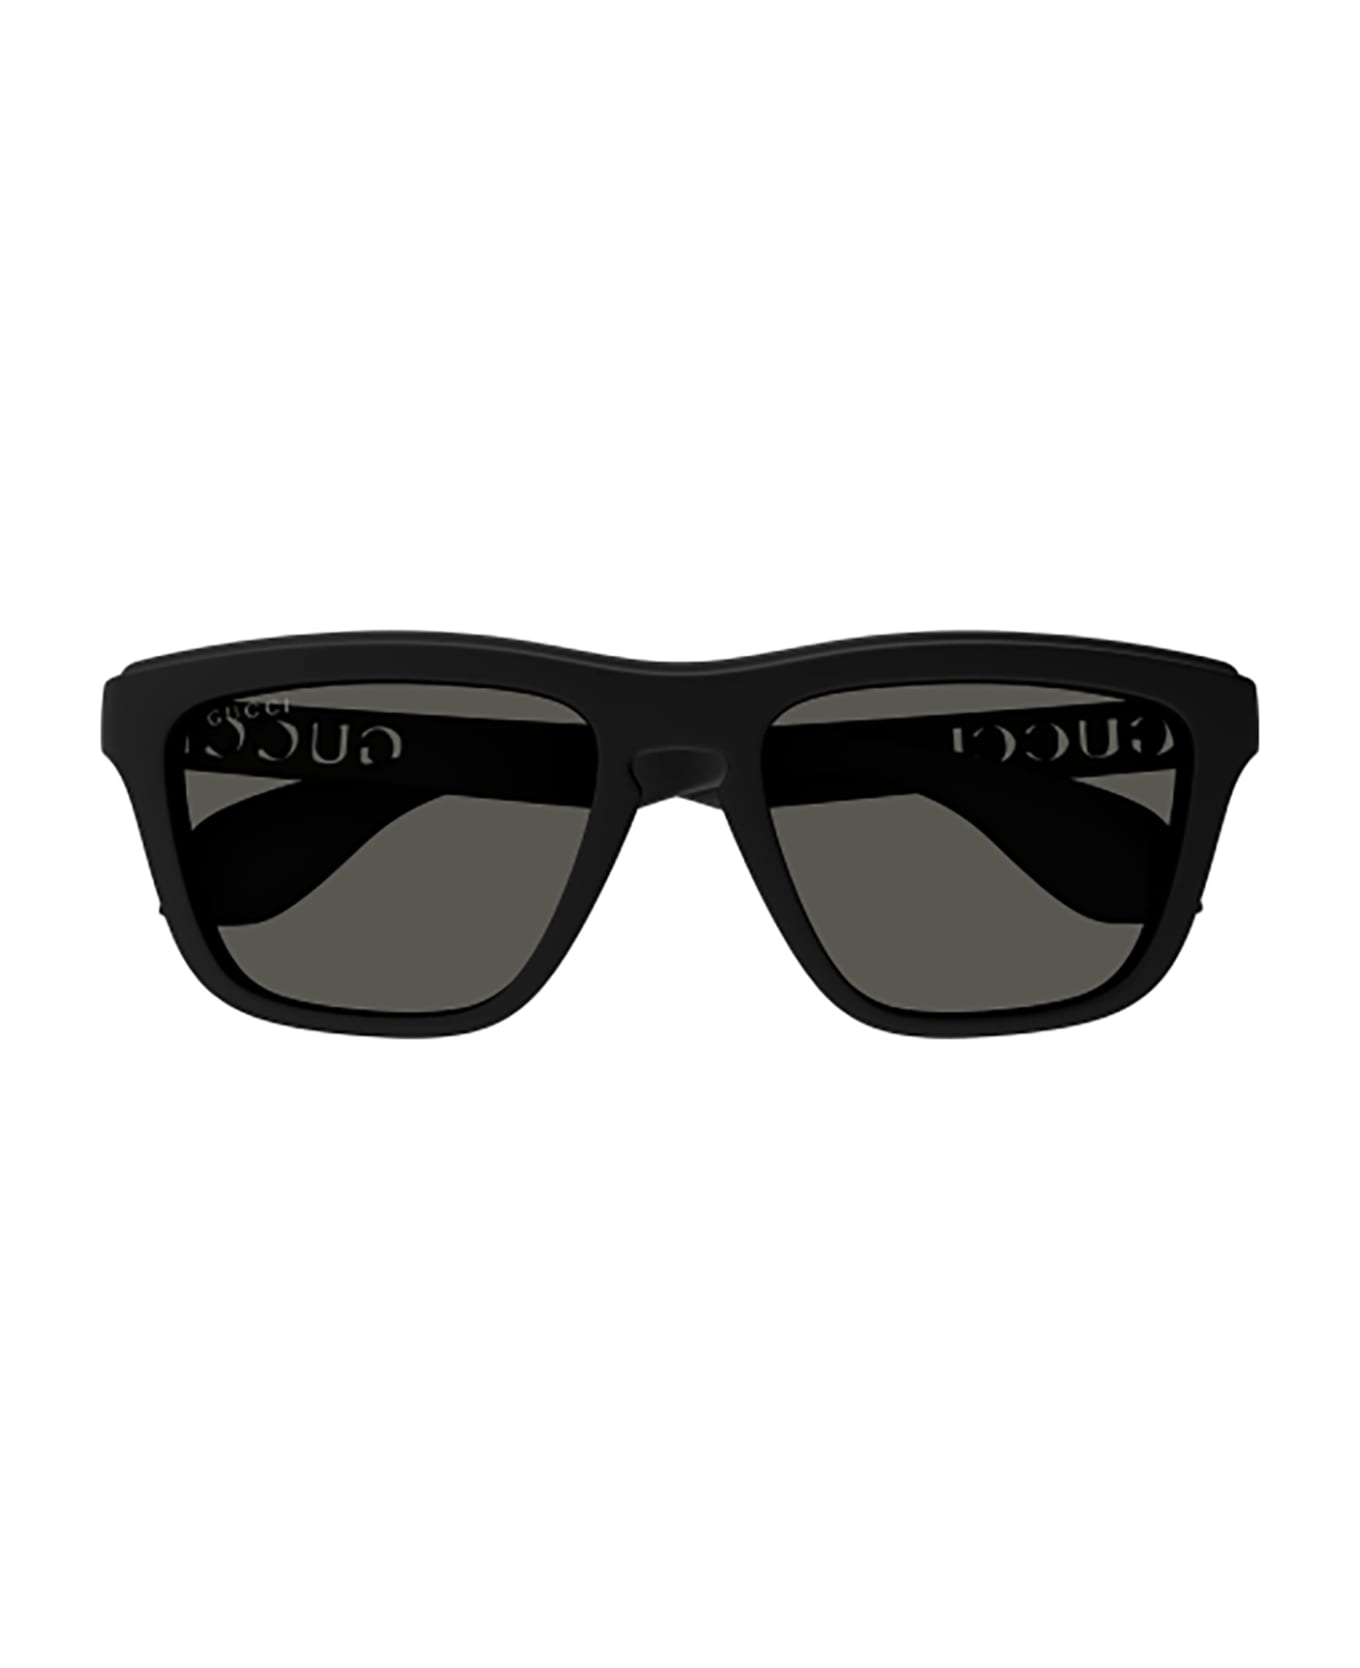 Gucci Eyewear GG1571S Sunglasses - Black Black Grey